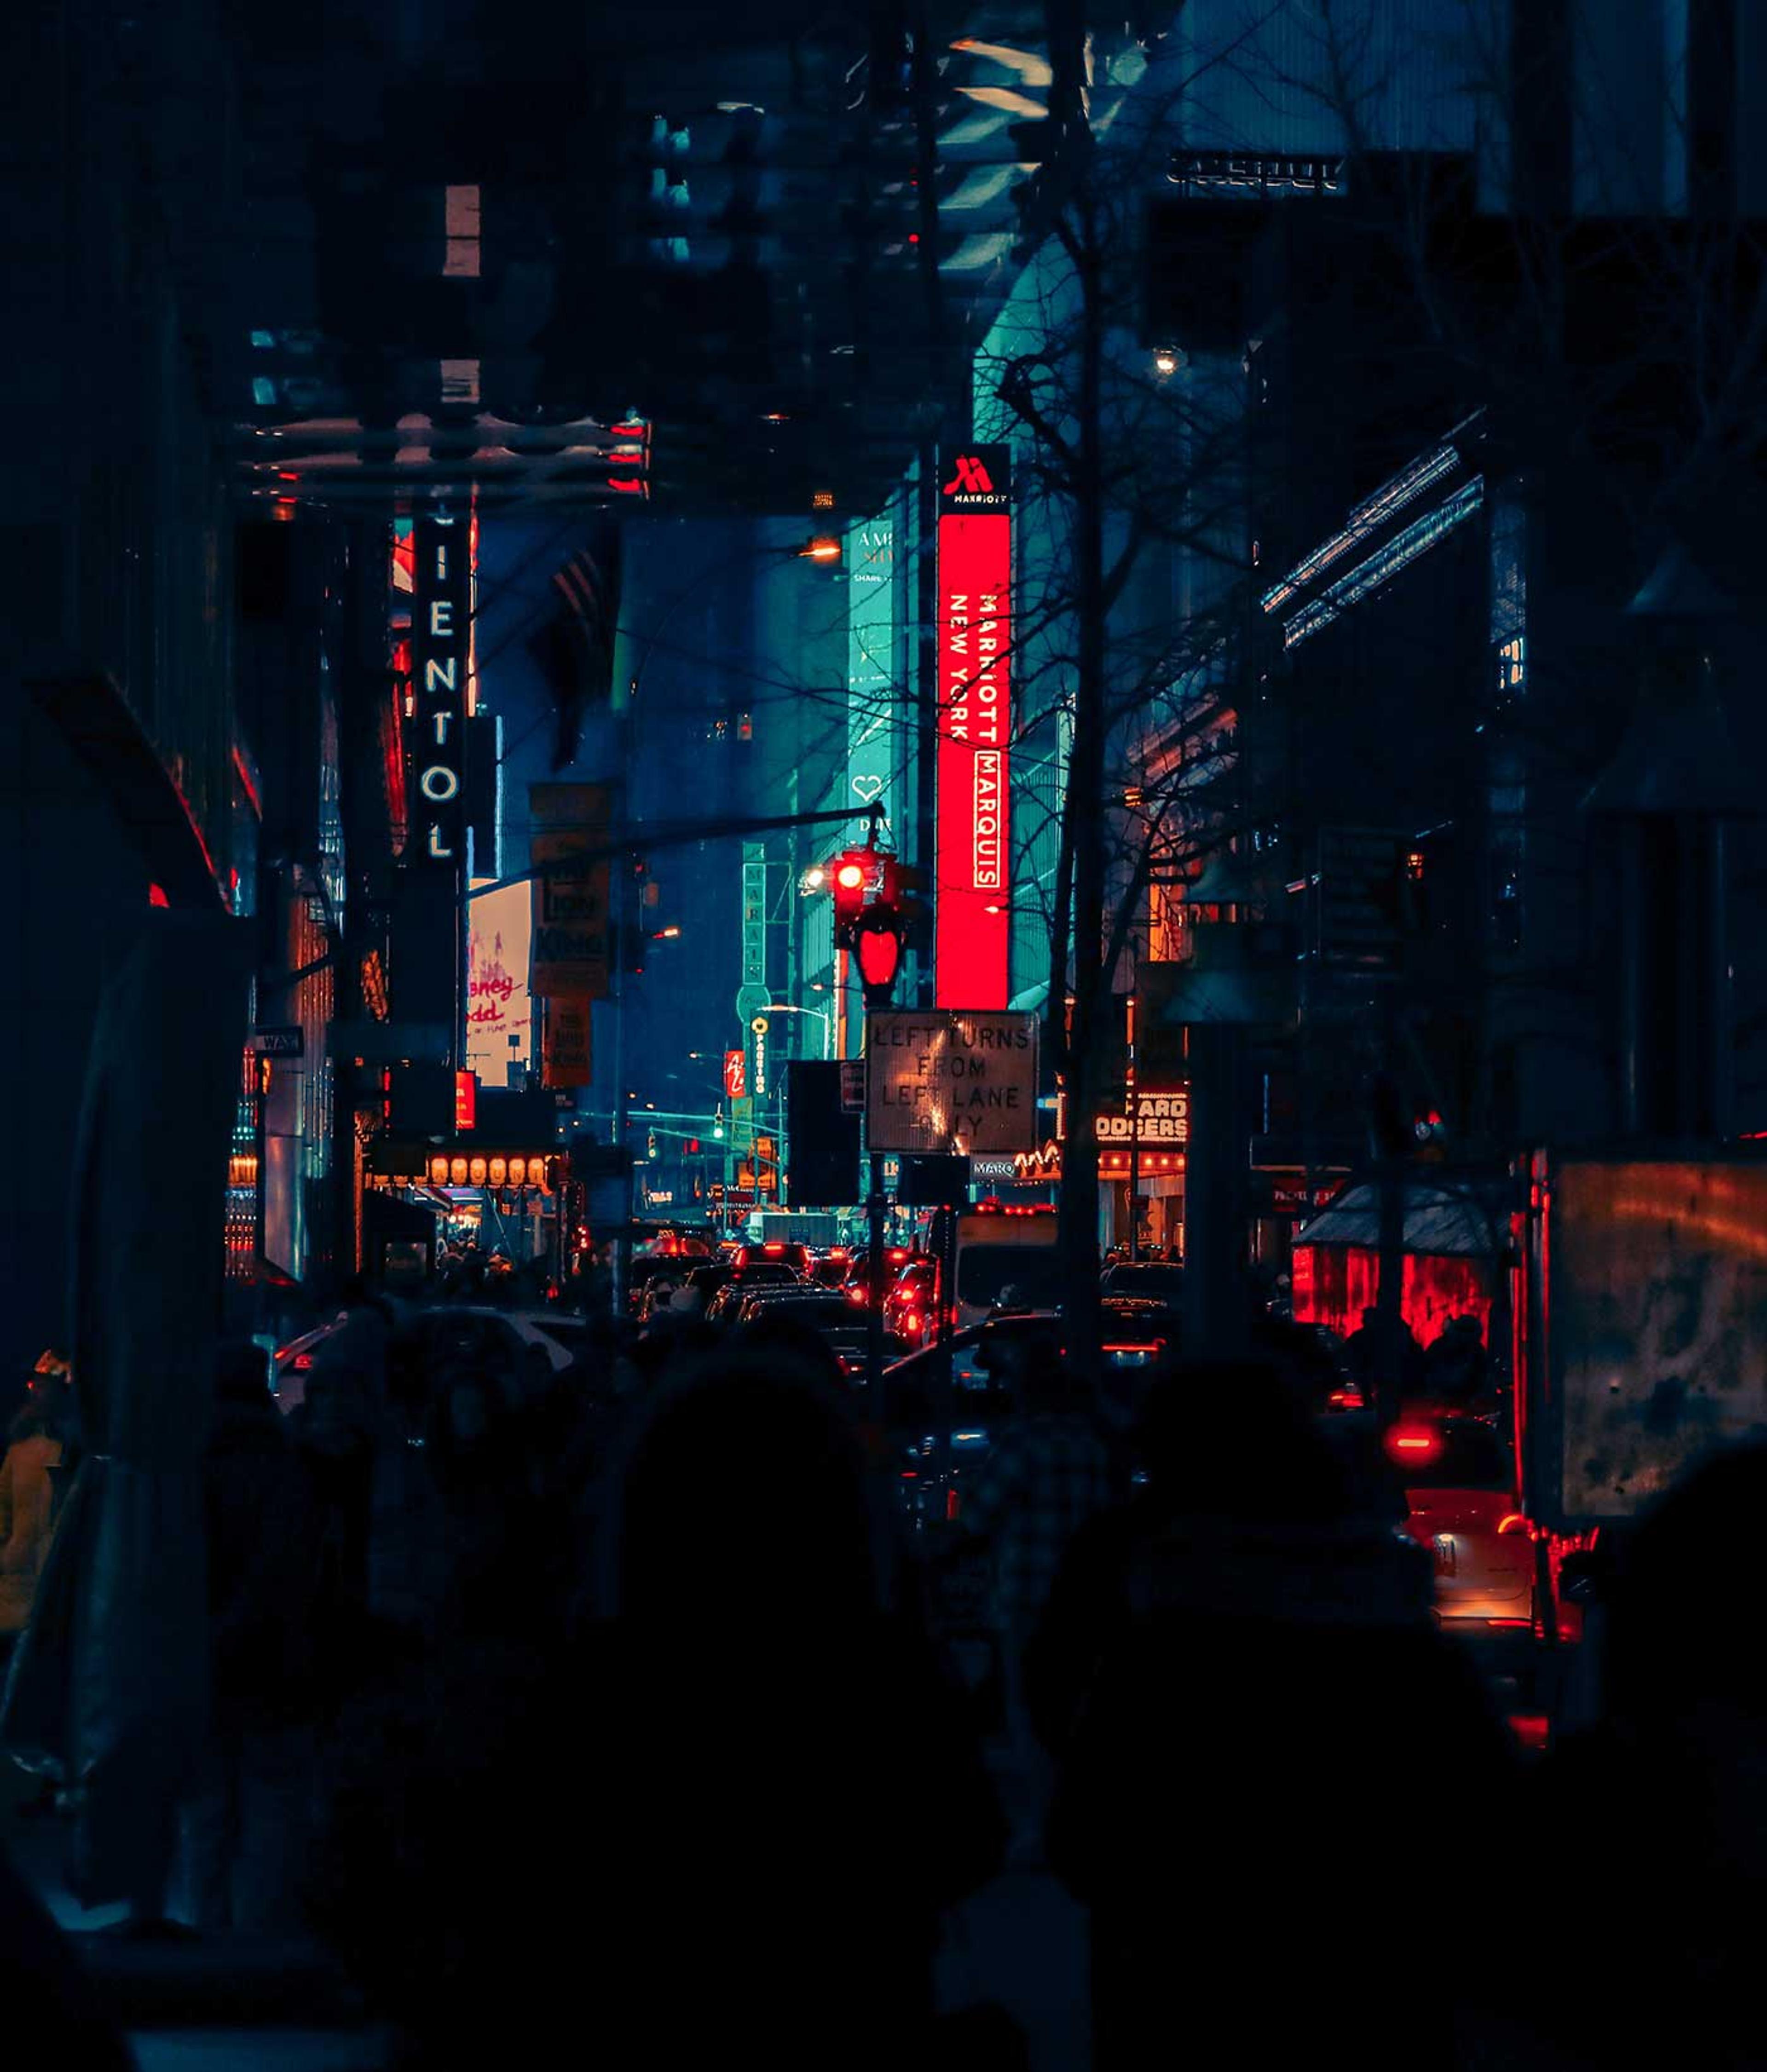 Digital photograph of a city street at night.